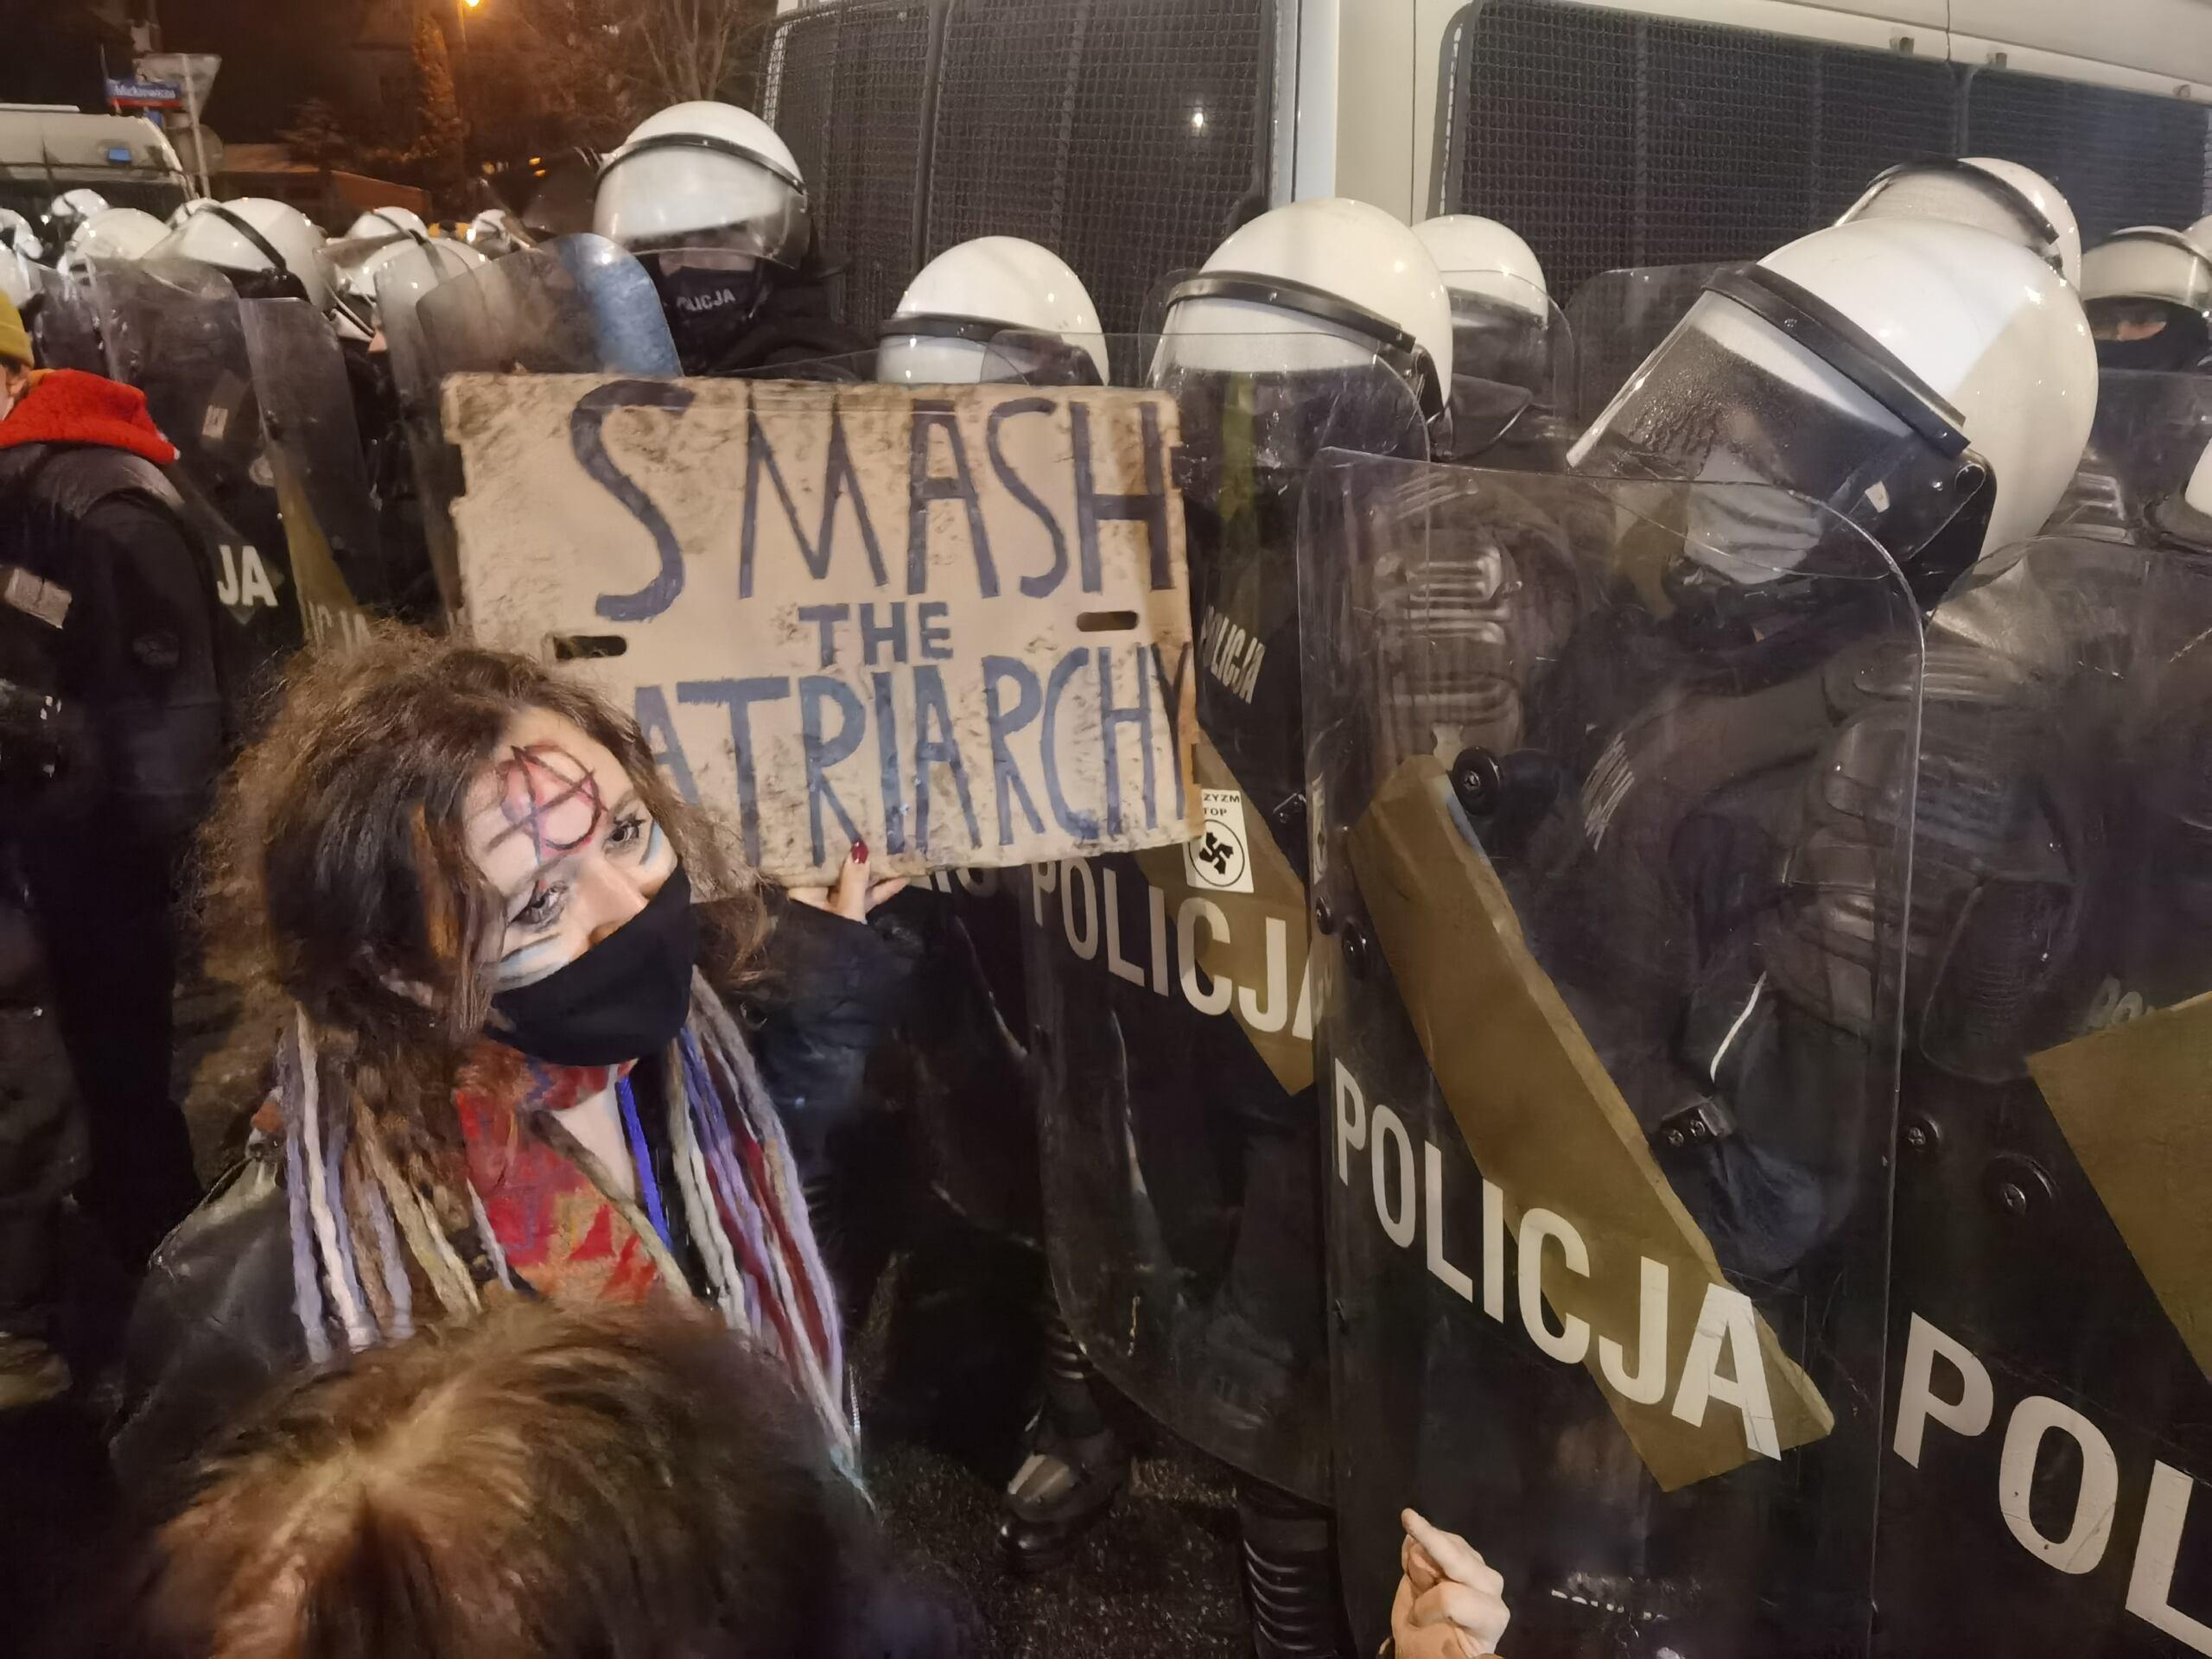 Smarsh the Patriarchy, Strajk Kobiet, policja, 29 stycznia 2021, fot. Robert Jurszo